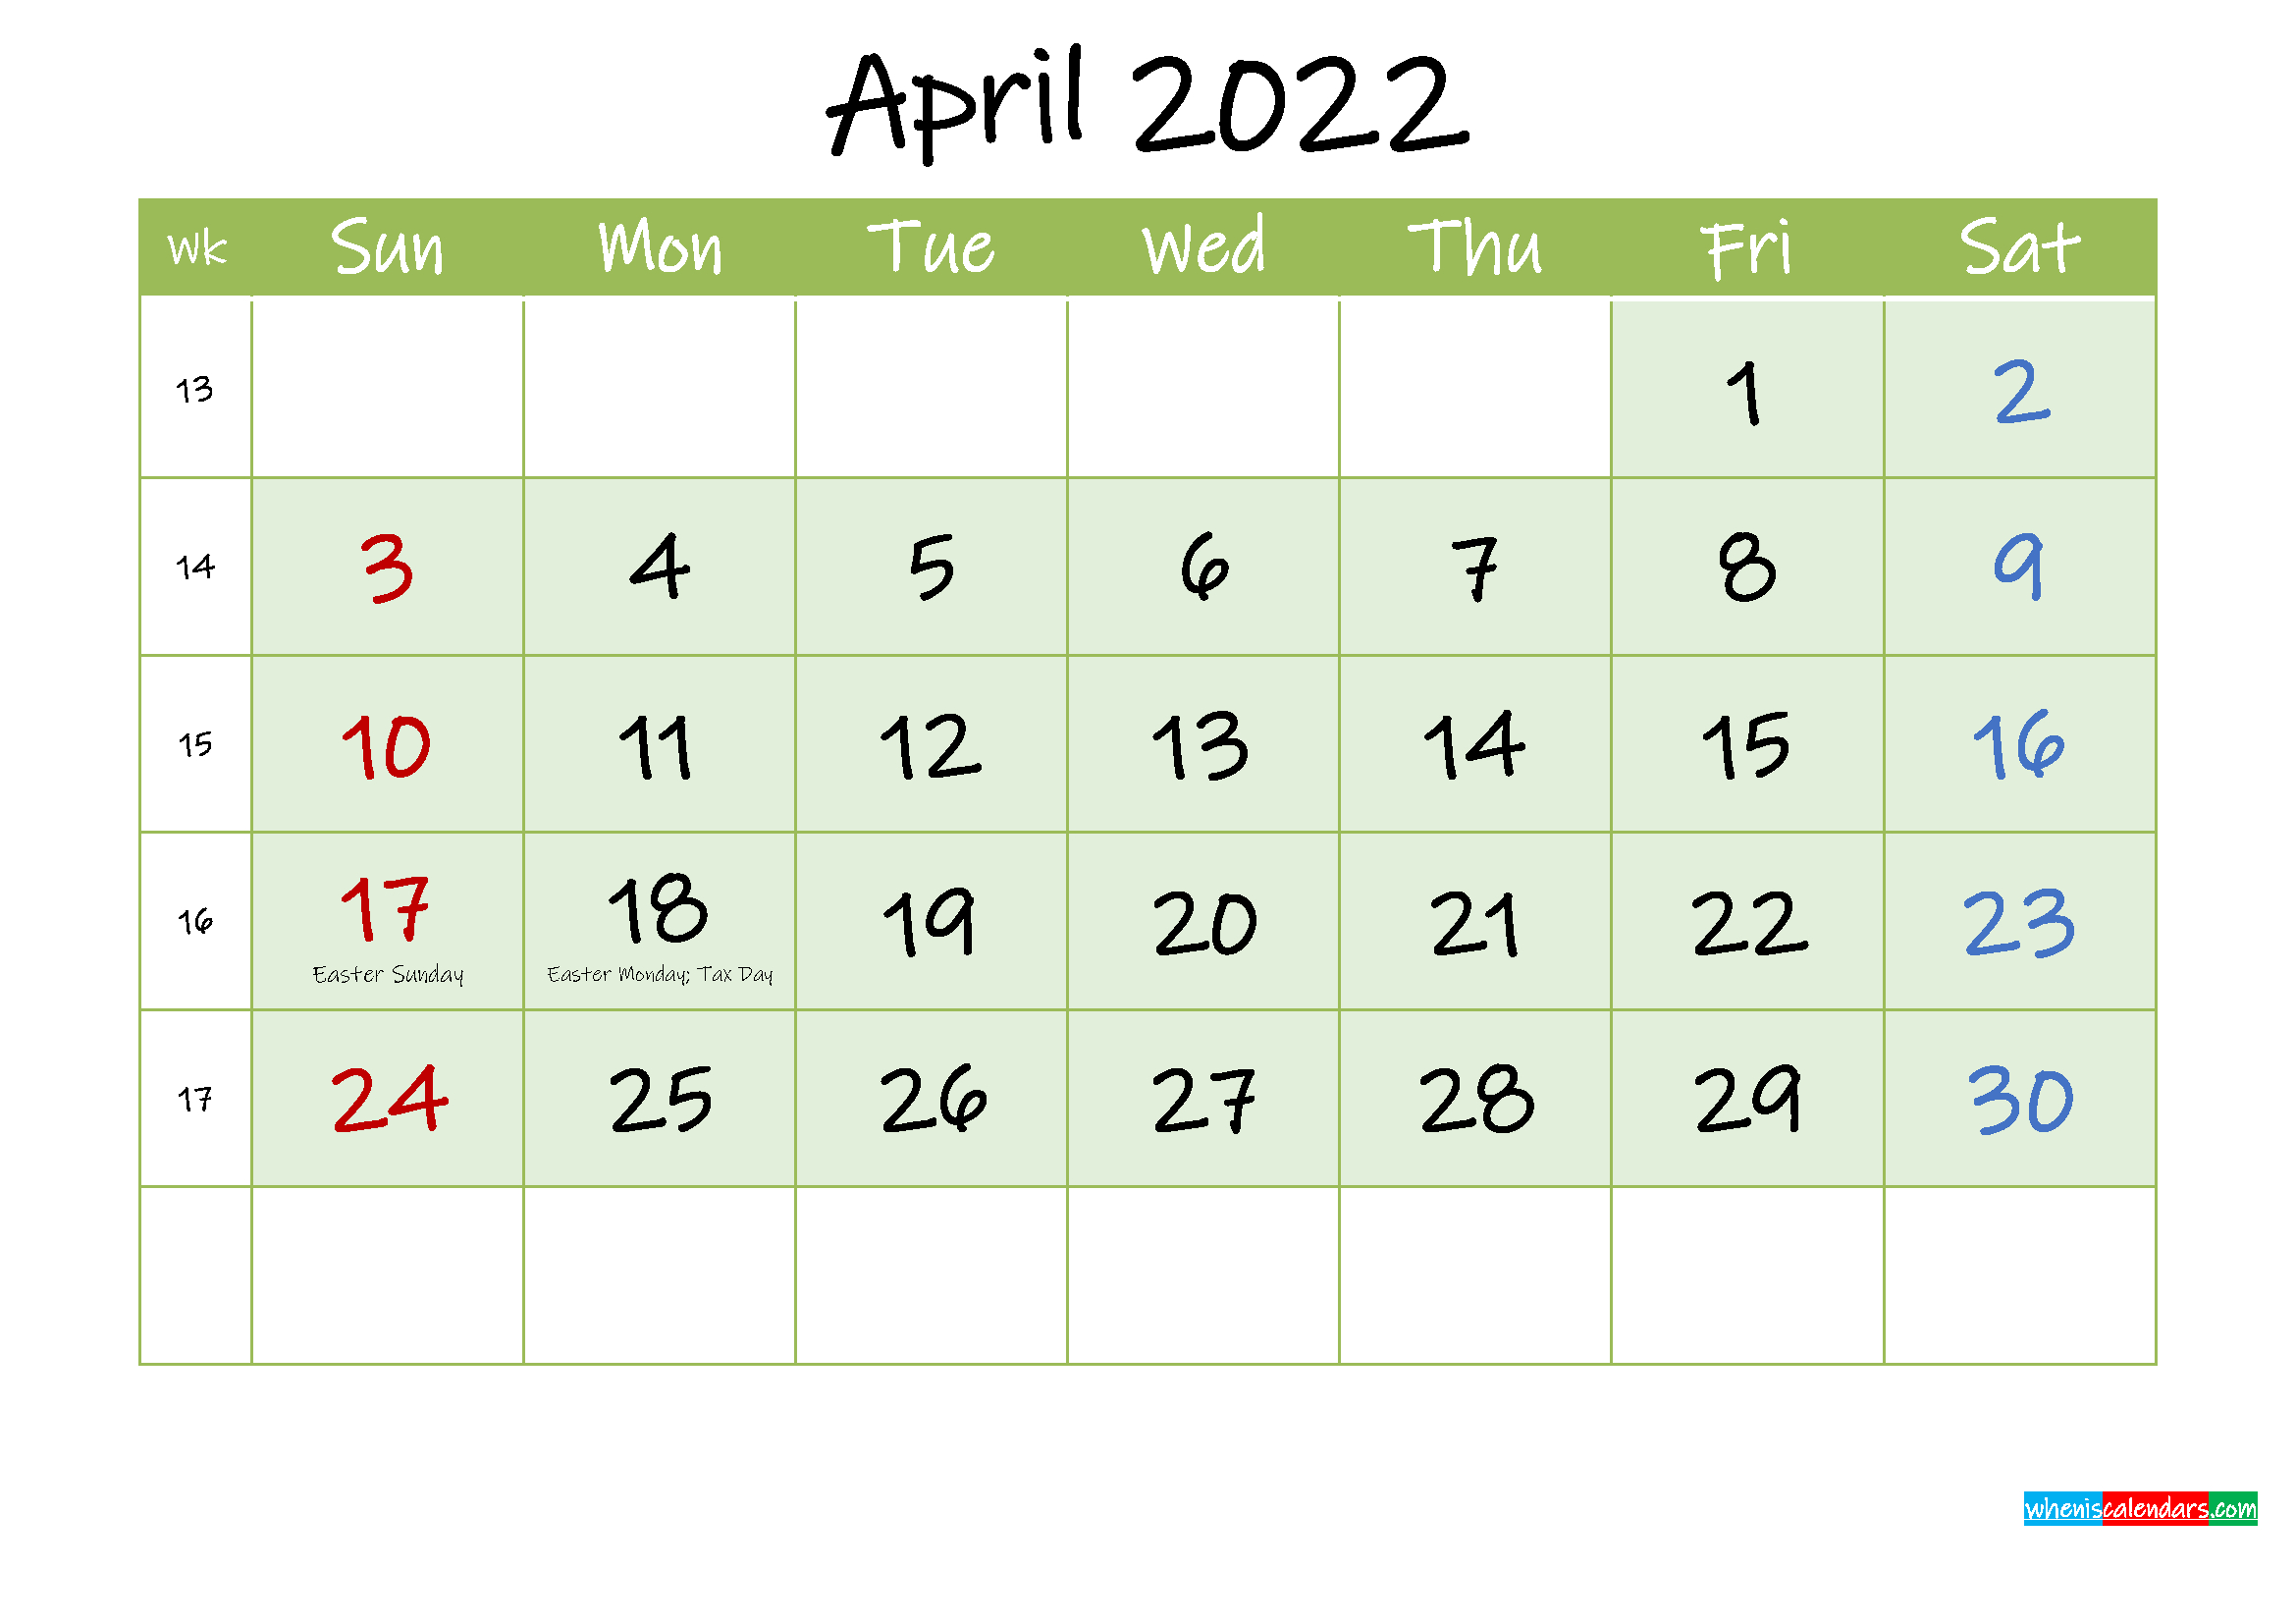 April 2022 Catholic Calendar - Latest News Update